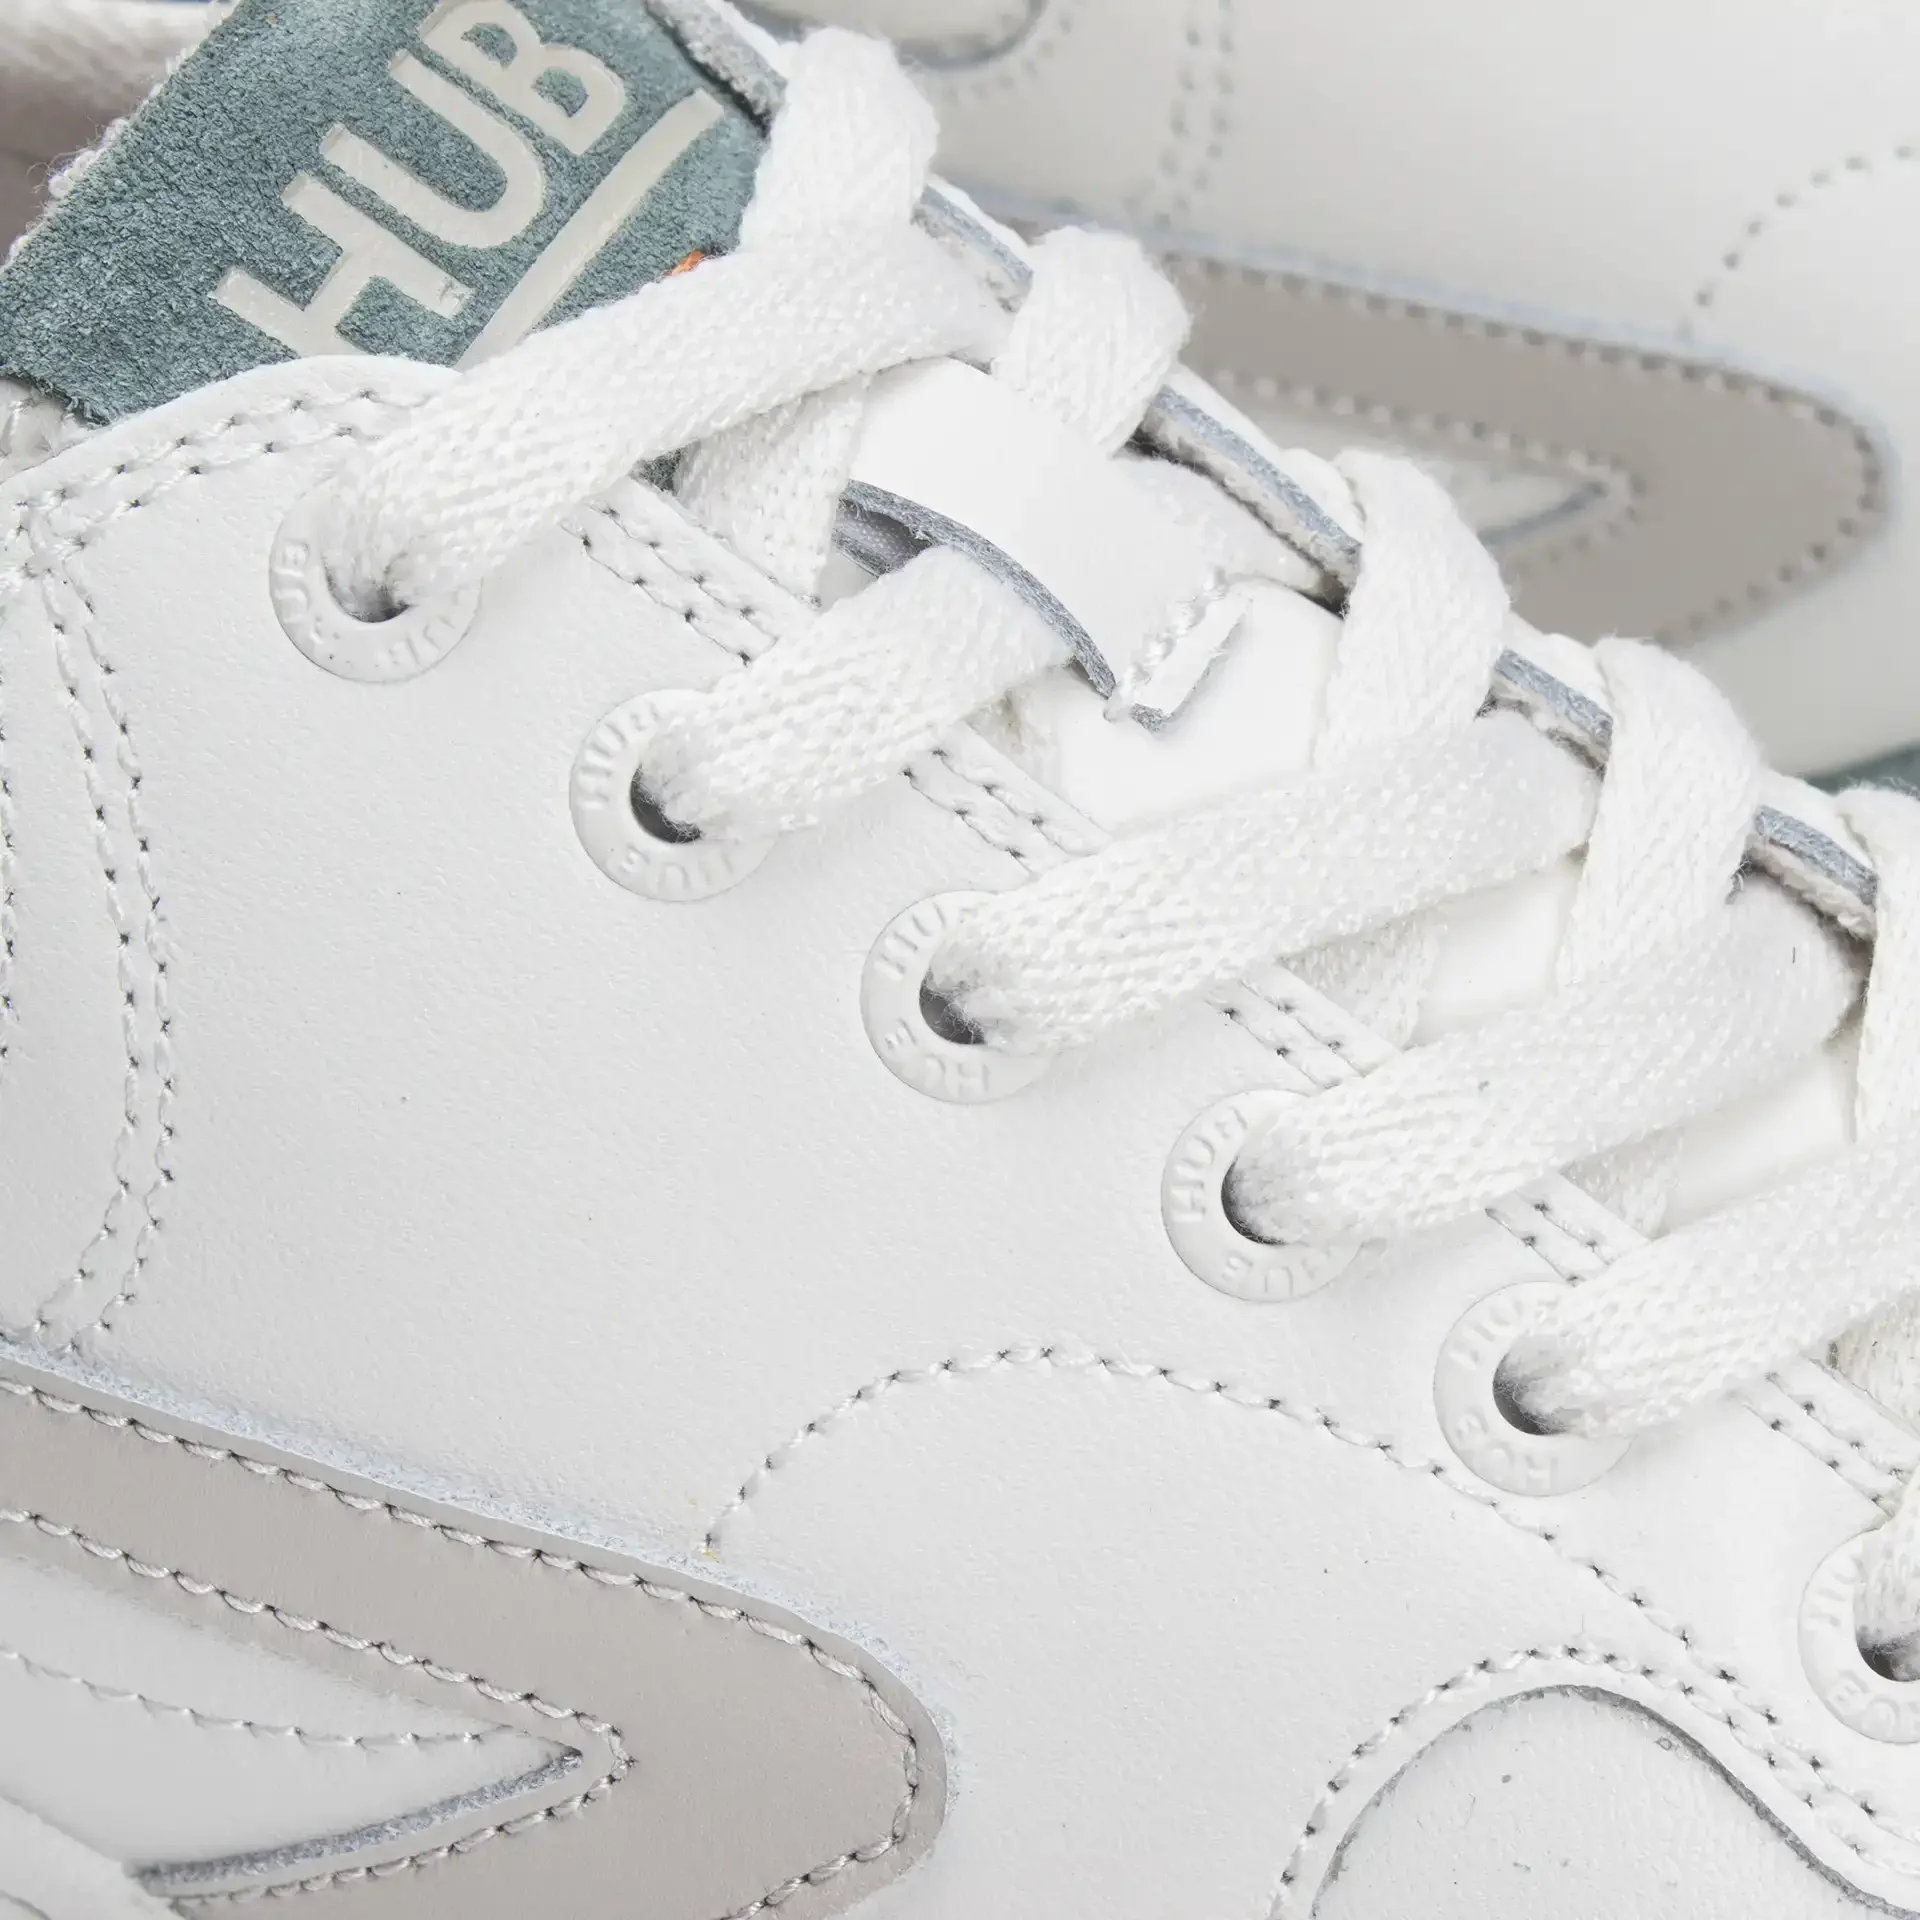 HUB Footwear Court Sneakers Off White/Beige/Leaf Green